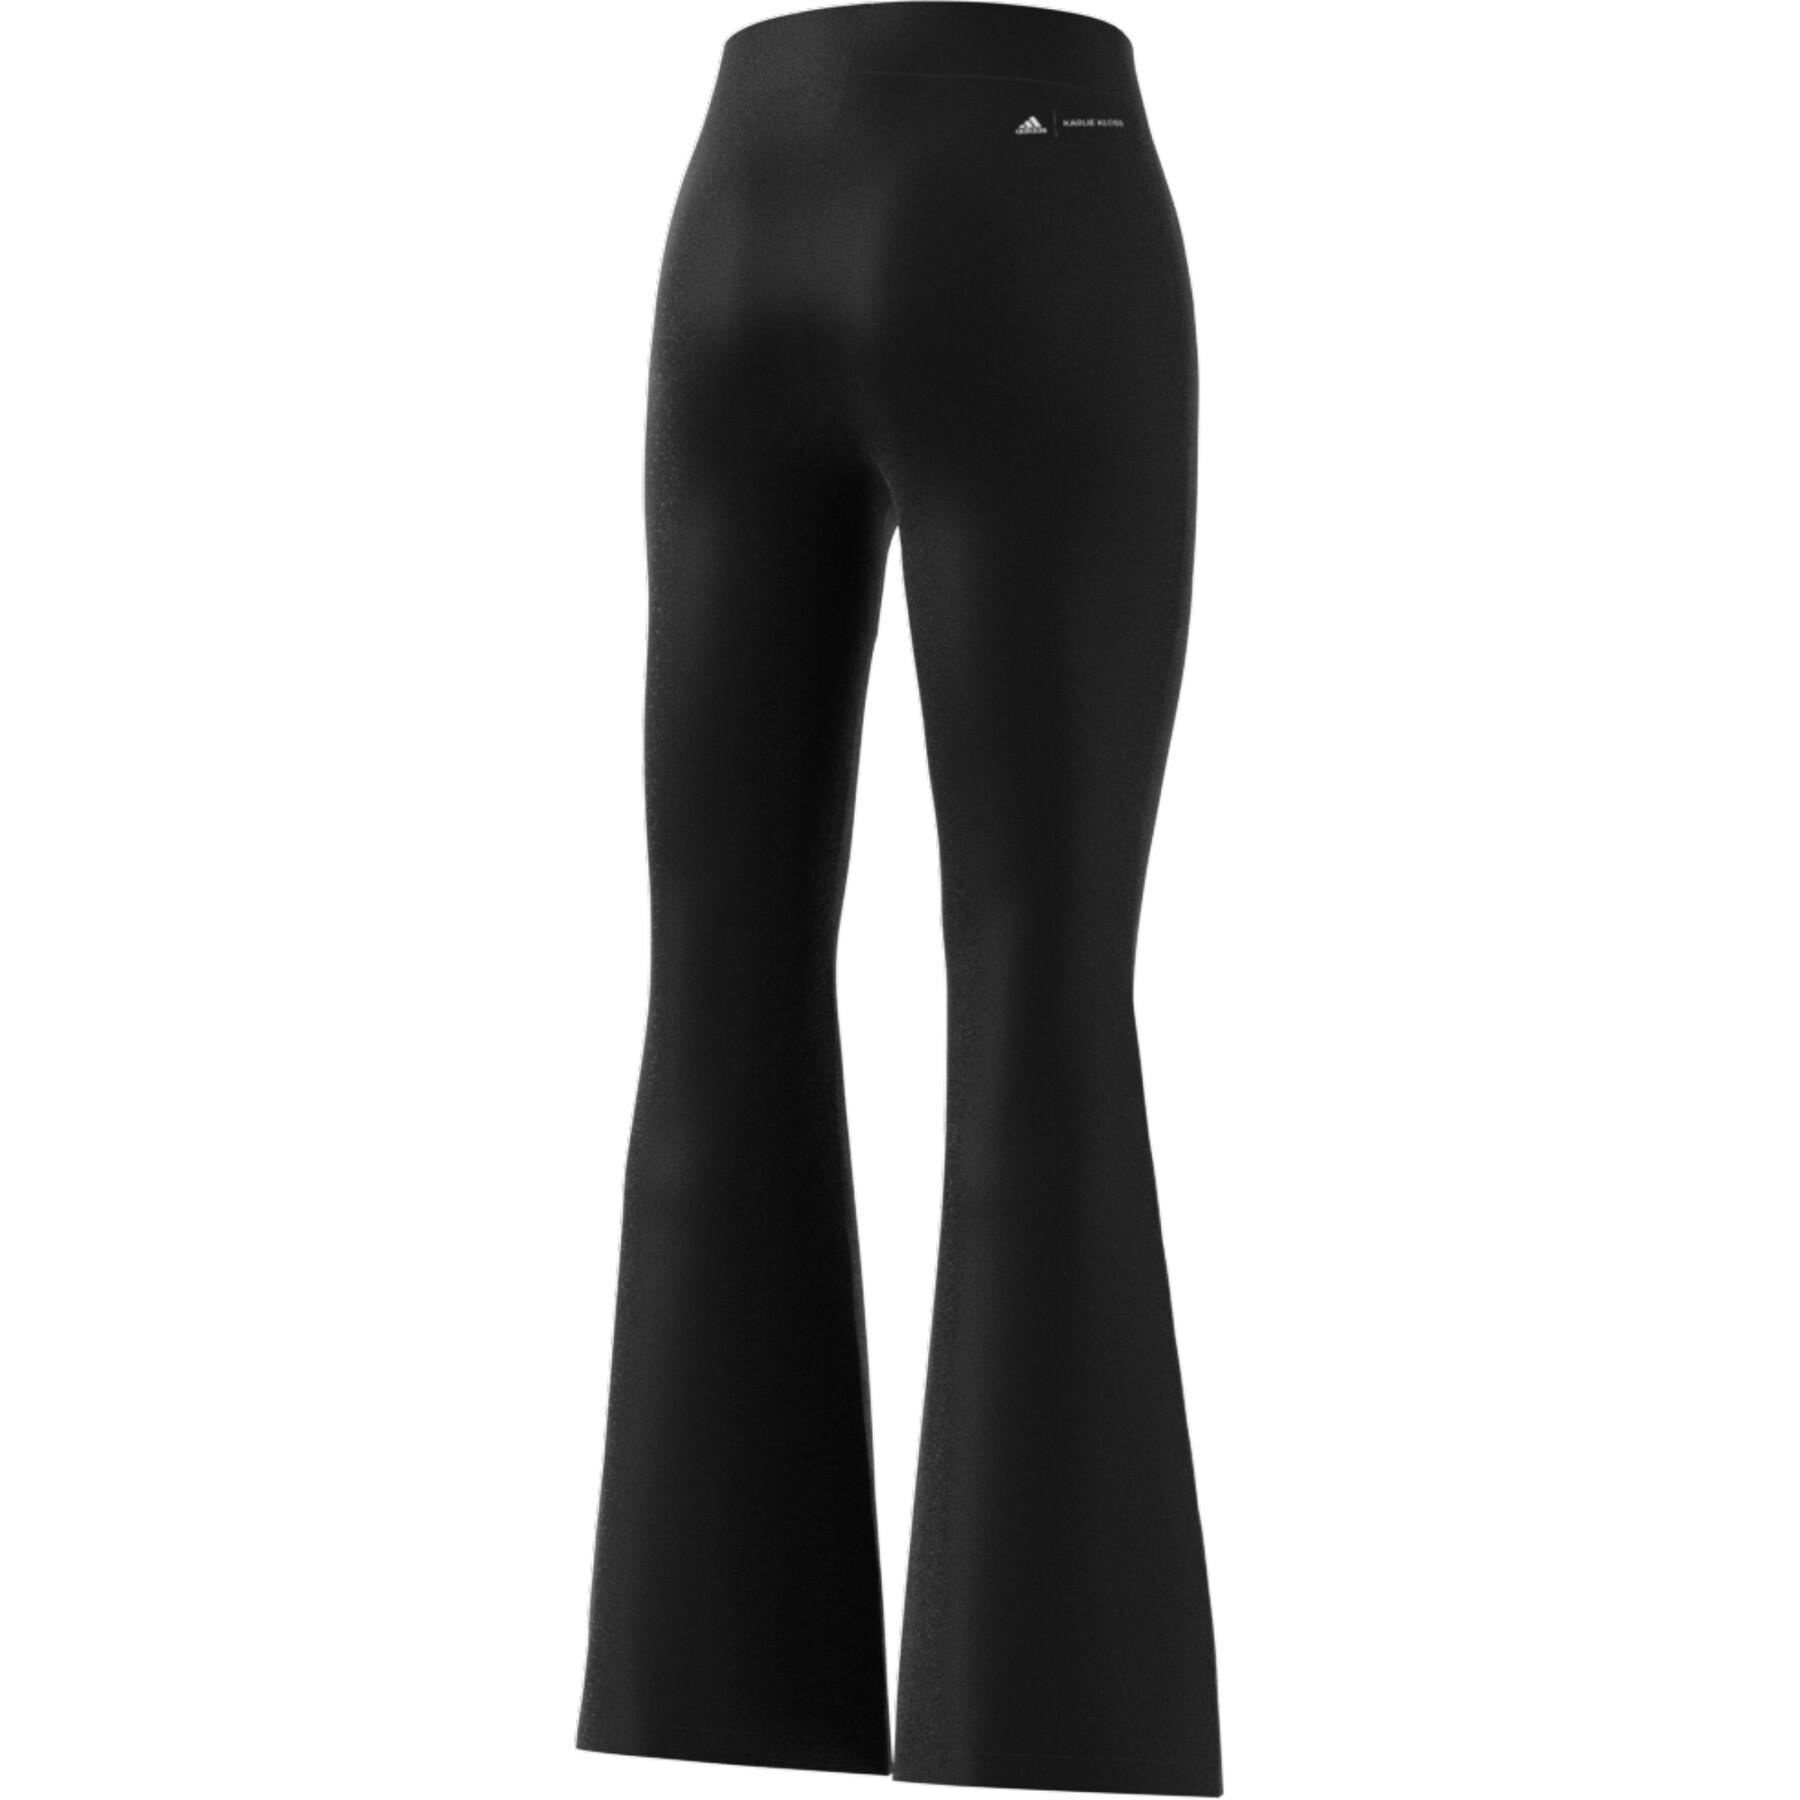 NWT Adidas x Karlie Kloss Flared Pants Womens Size XL